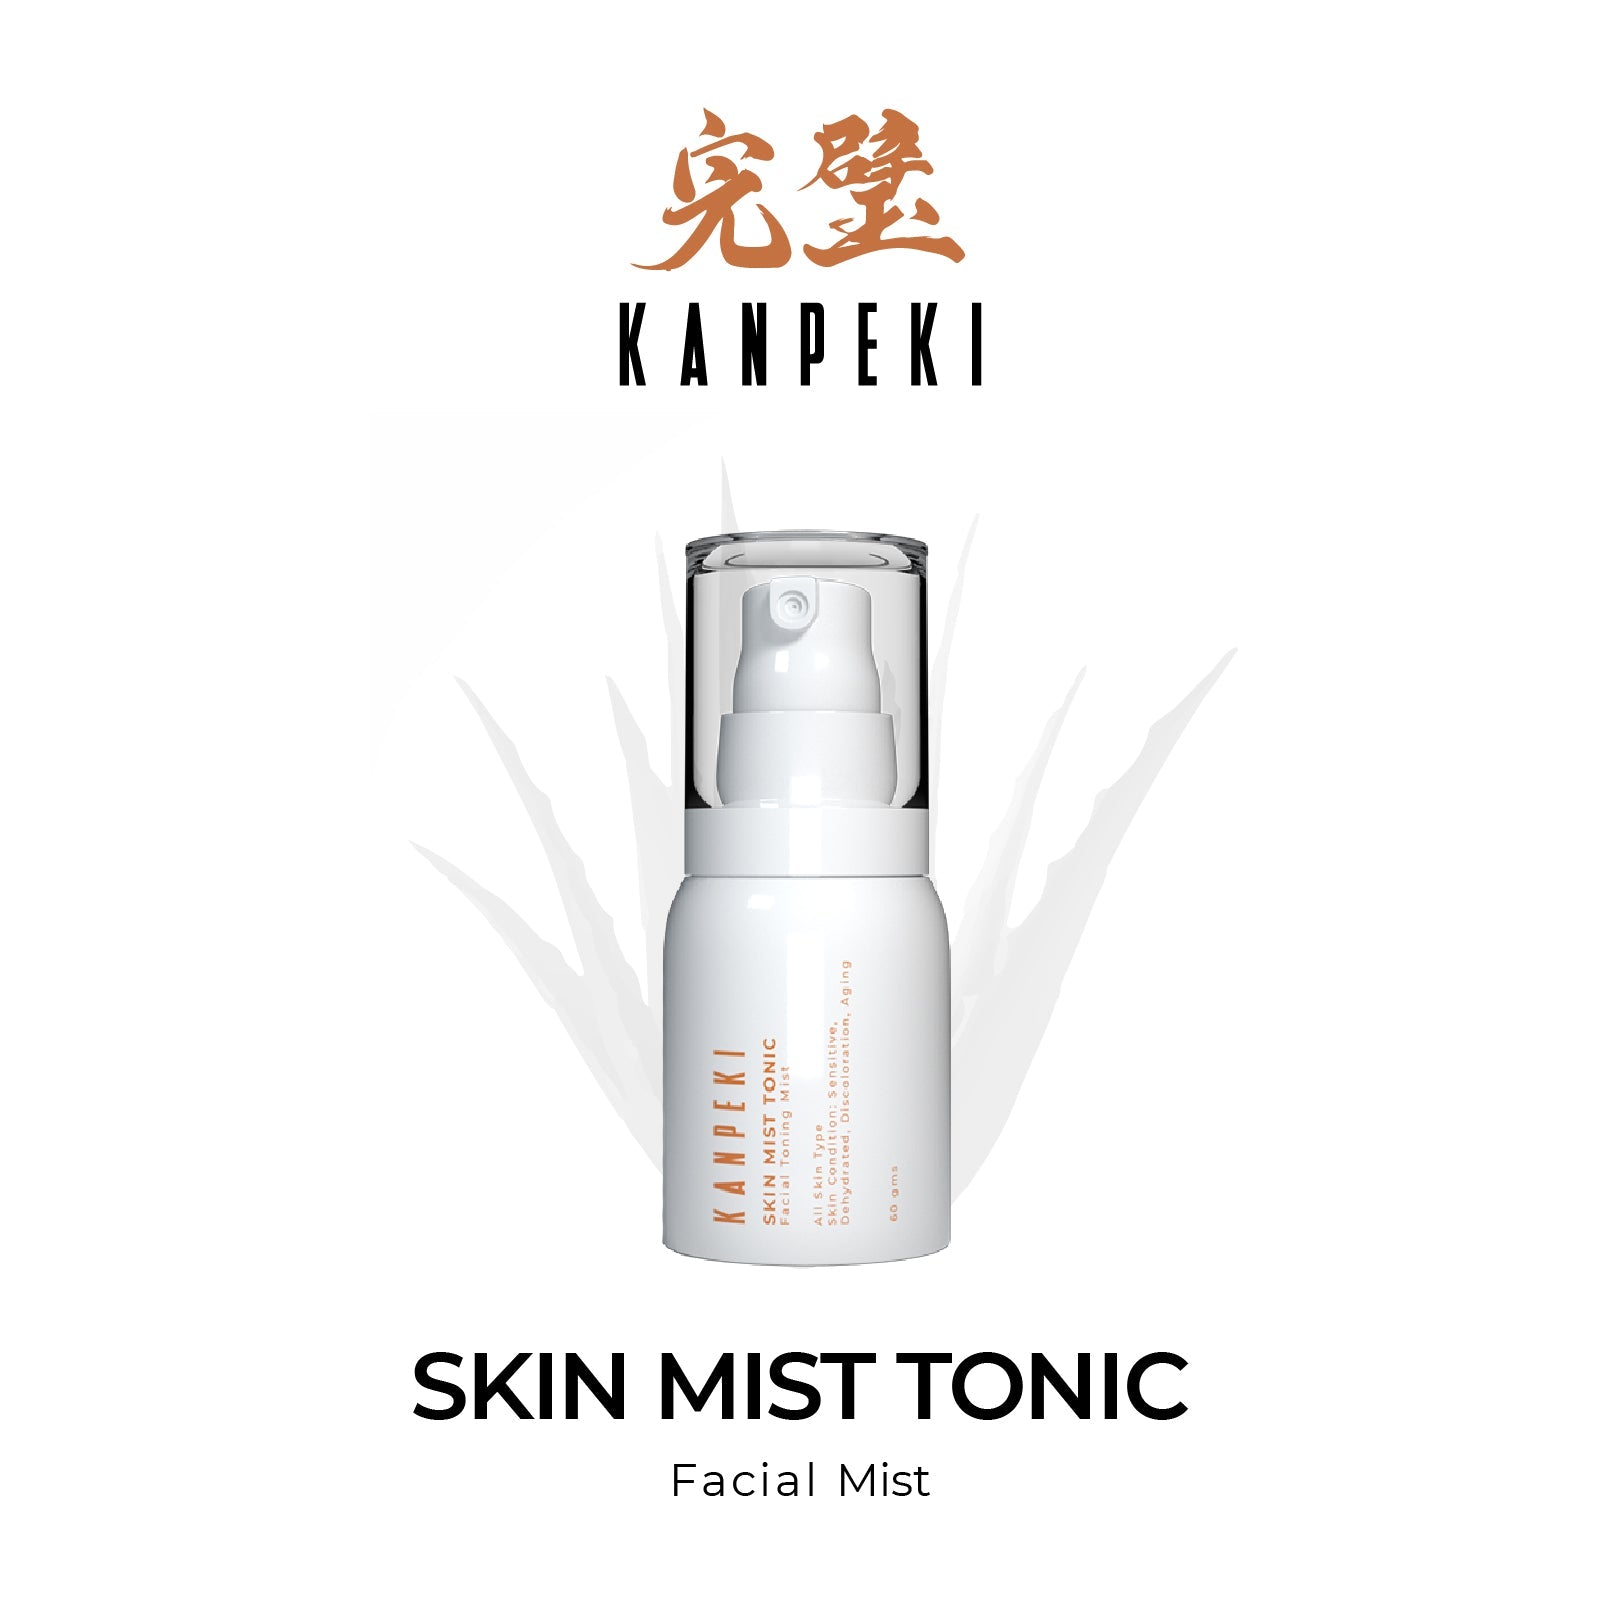 Skin Mist Tonic - Kanpeki Skincare